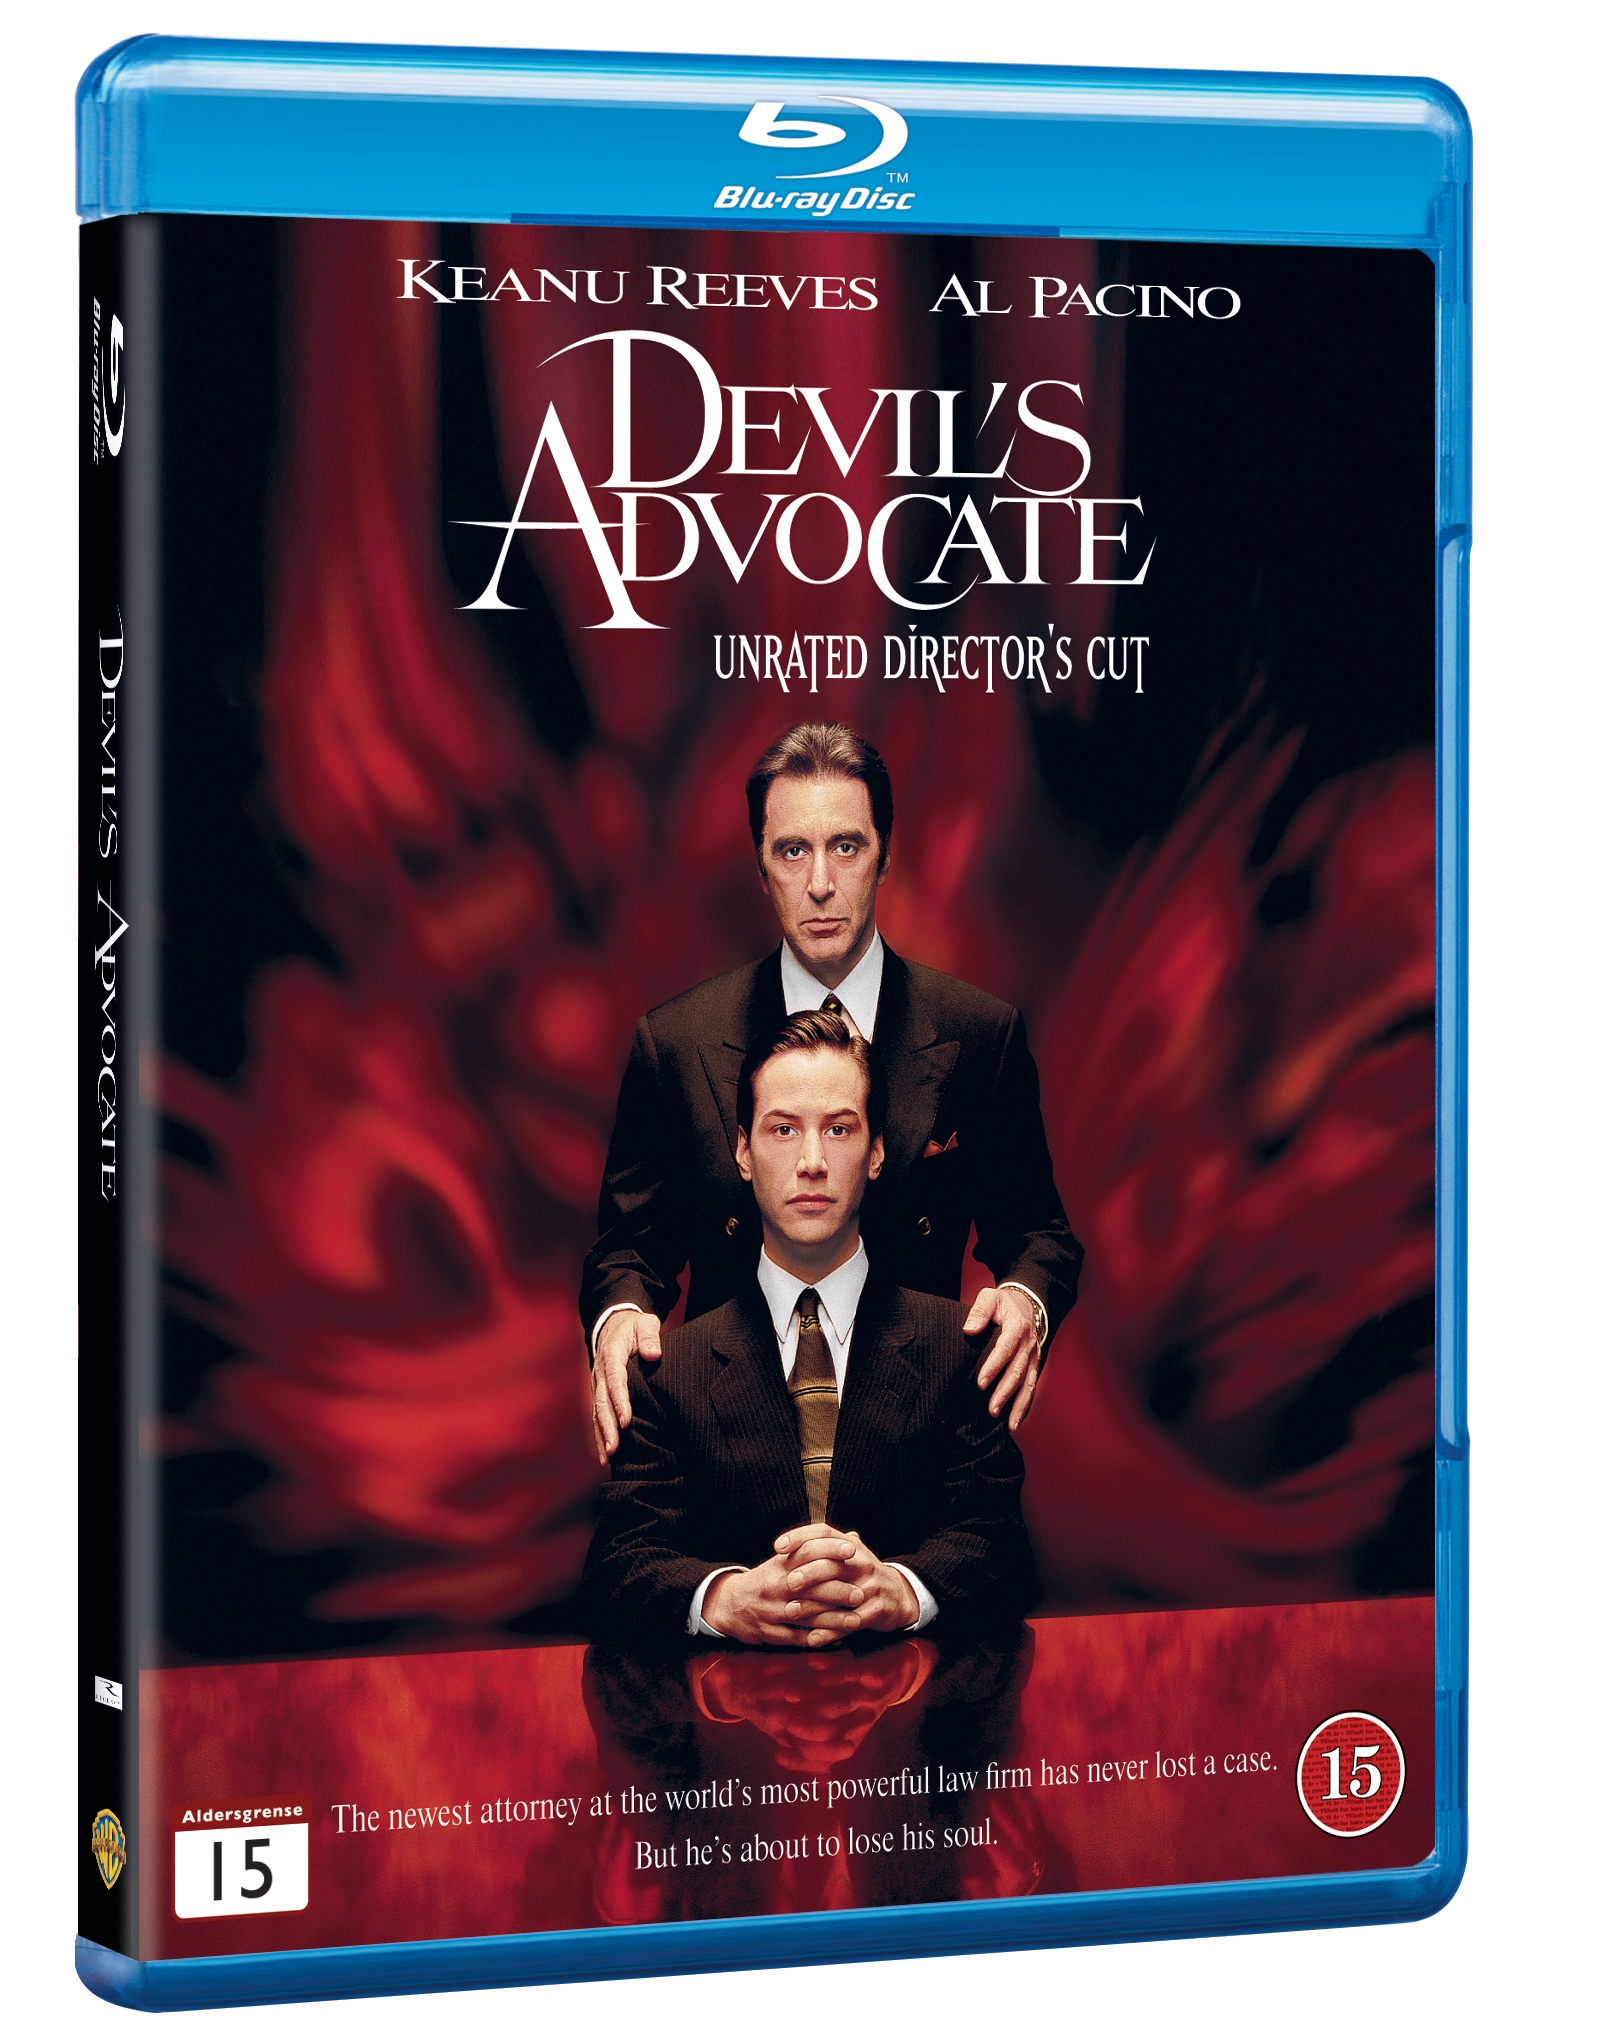 The Devil'S Advocate Dir.Cut - Blu ray, Warner Bros